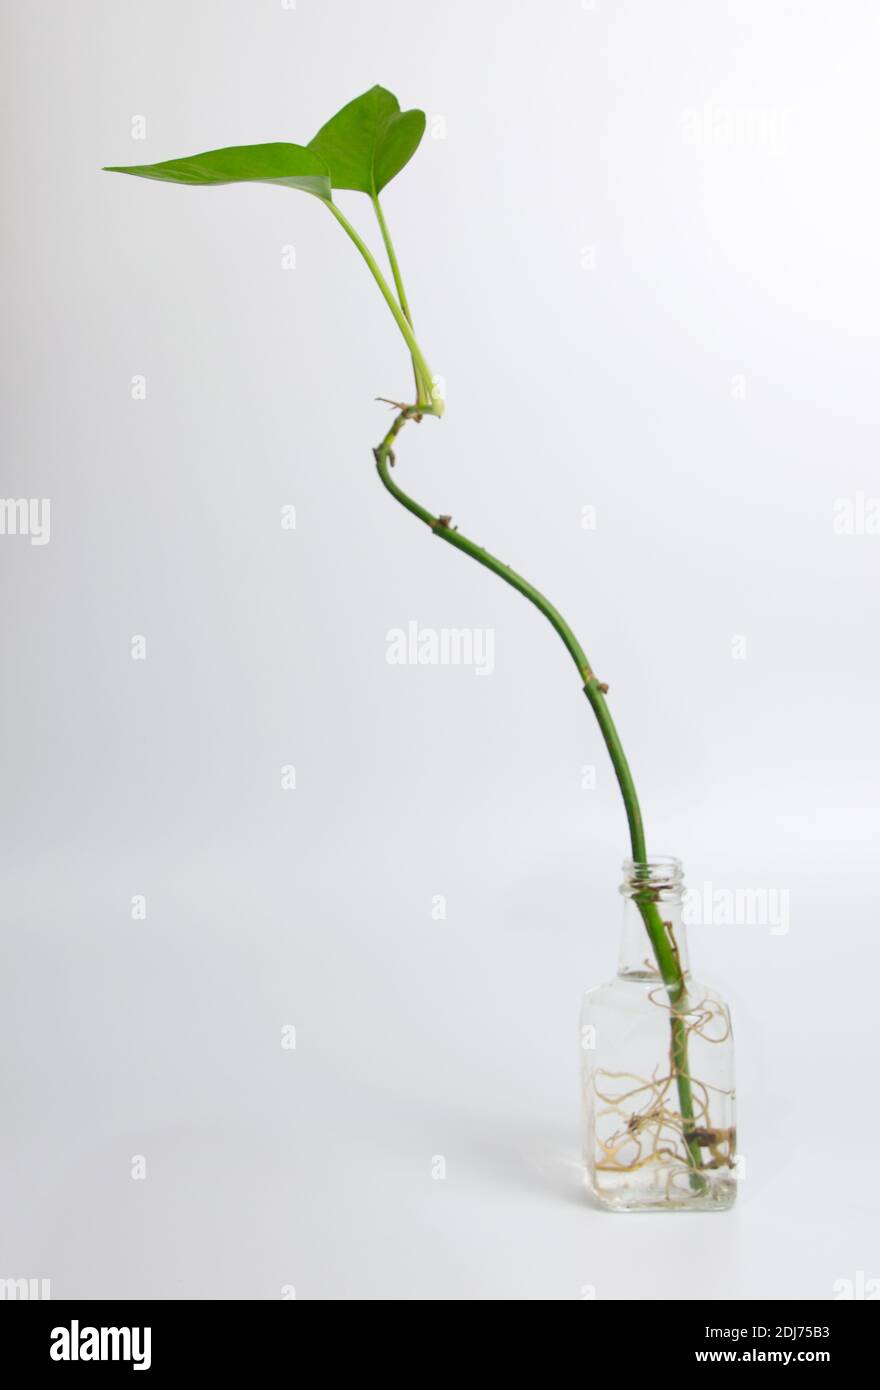 Epipremnum aureum / Devils Ivy / Pothos house plant growing in water Stock Photo